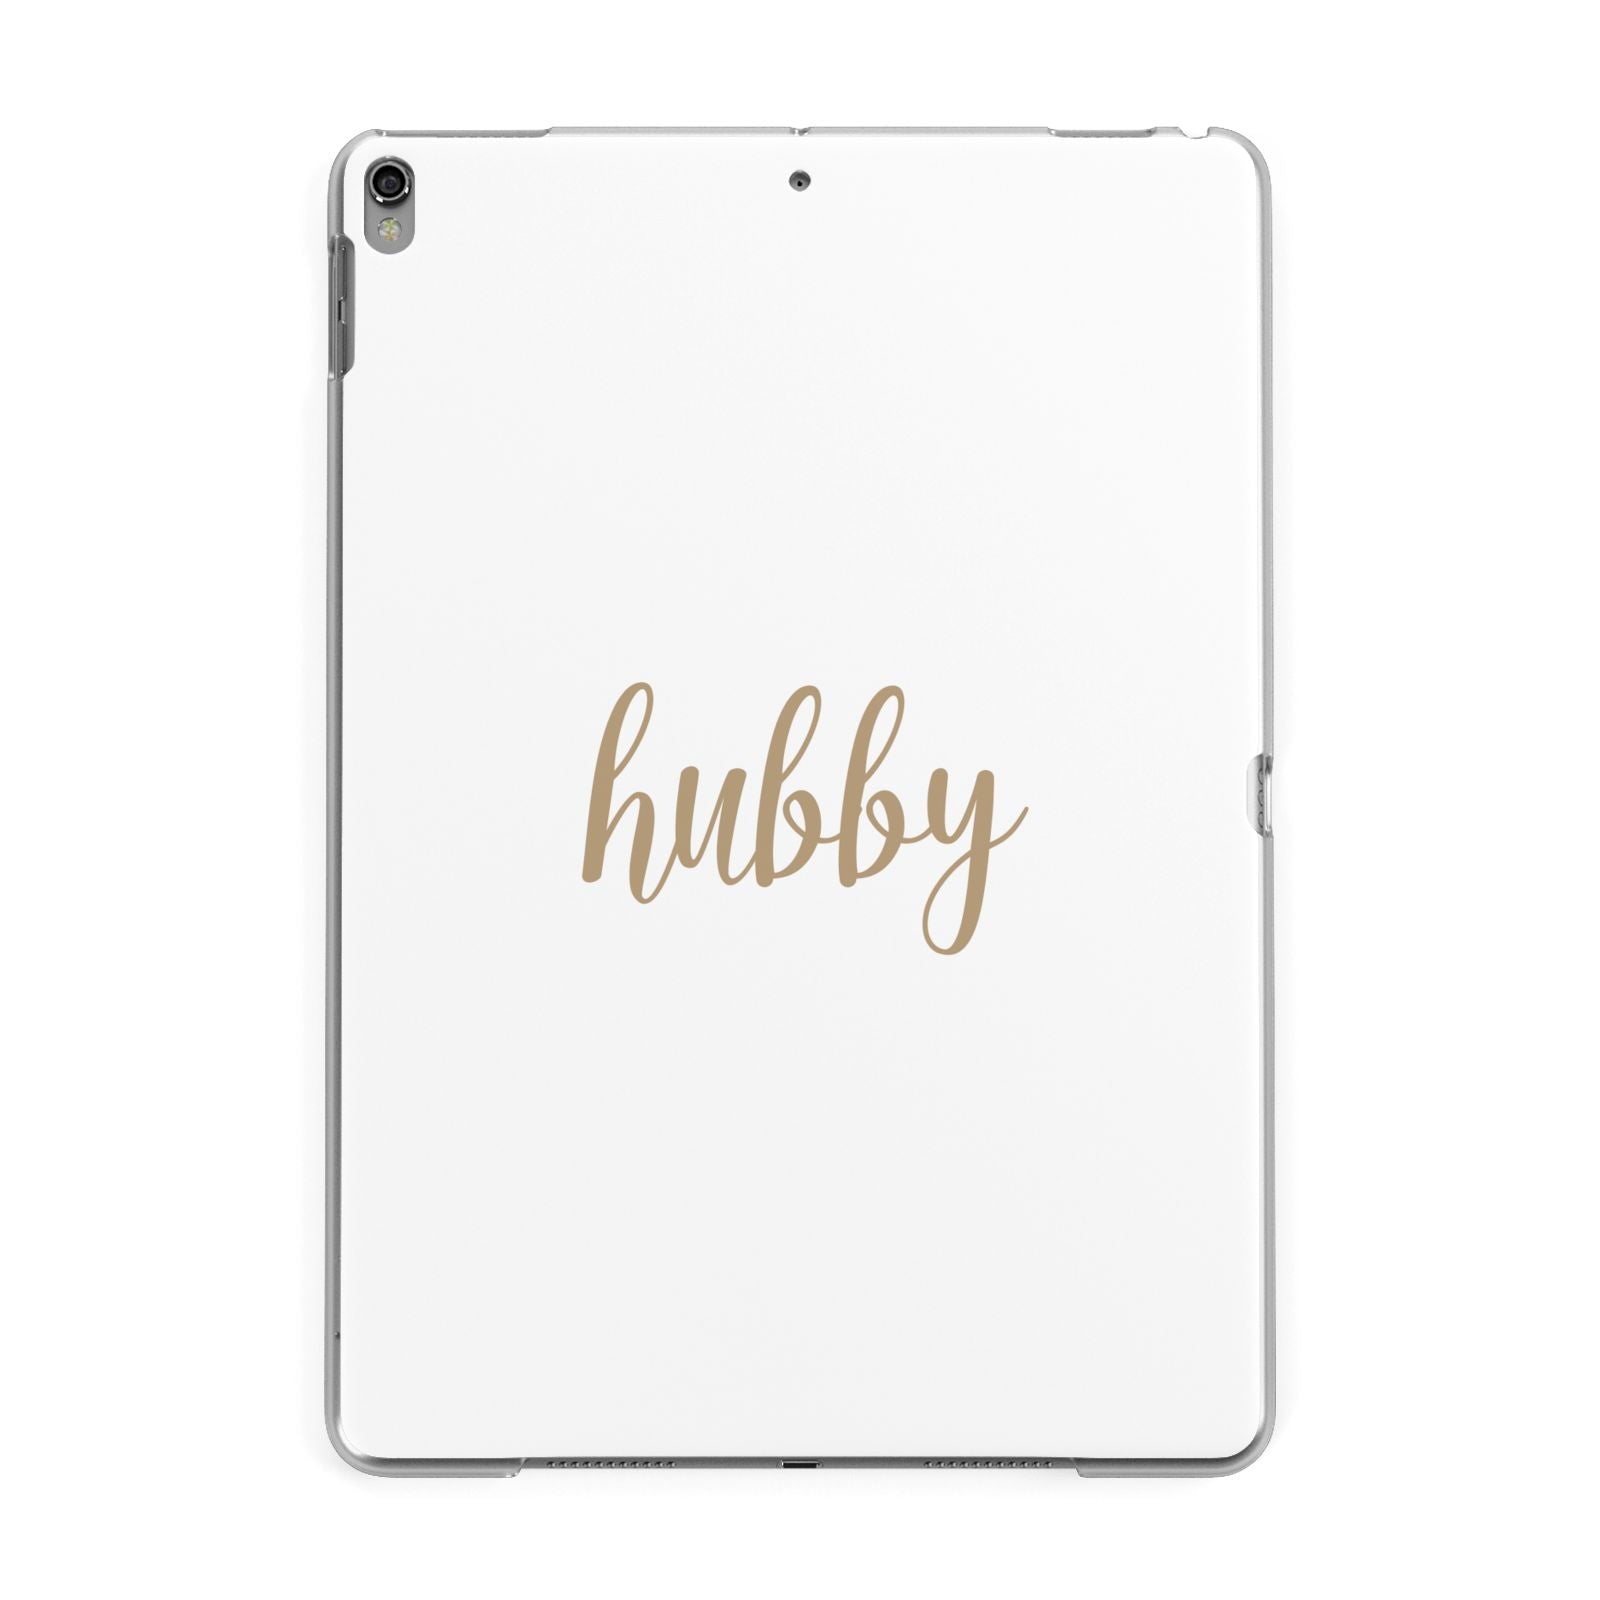 Hubby Apple iPad Grey Case